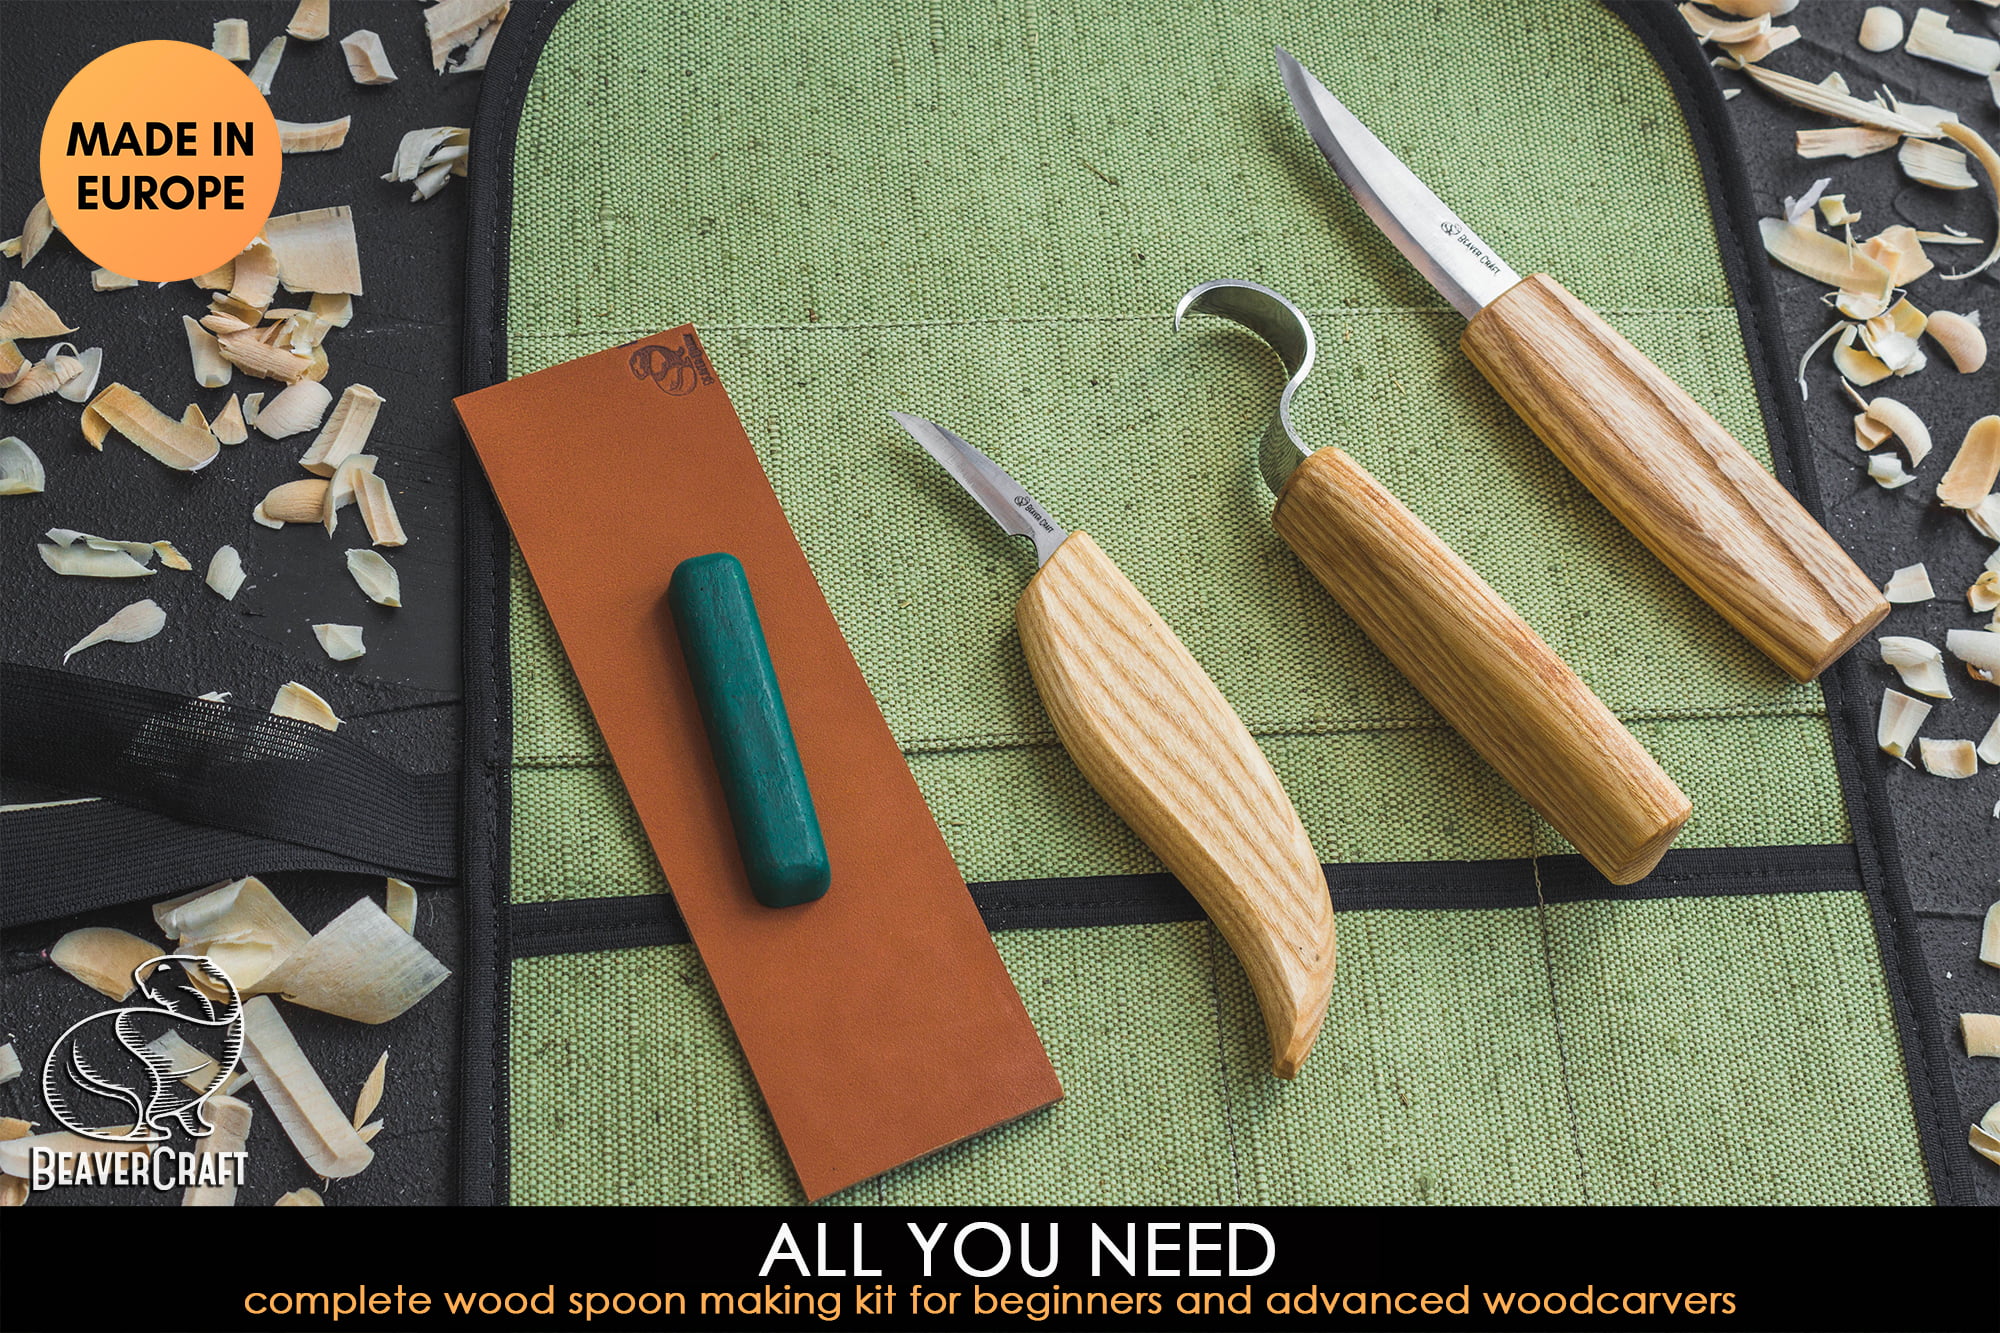 Wood Carving Kits from BeaverCraft: How Do We Make Them – BeaverCraft Tools